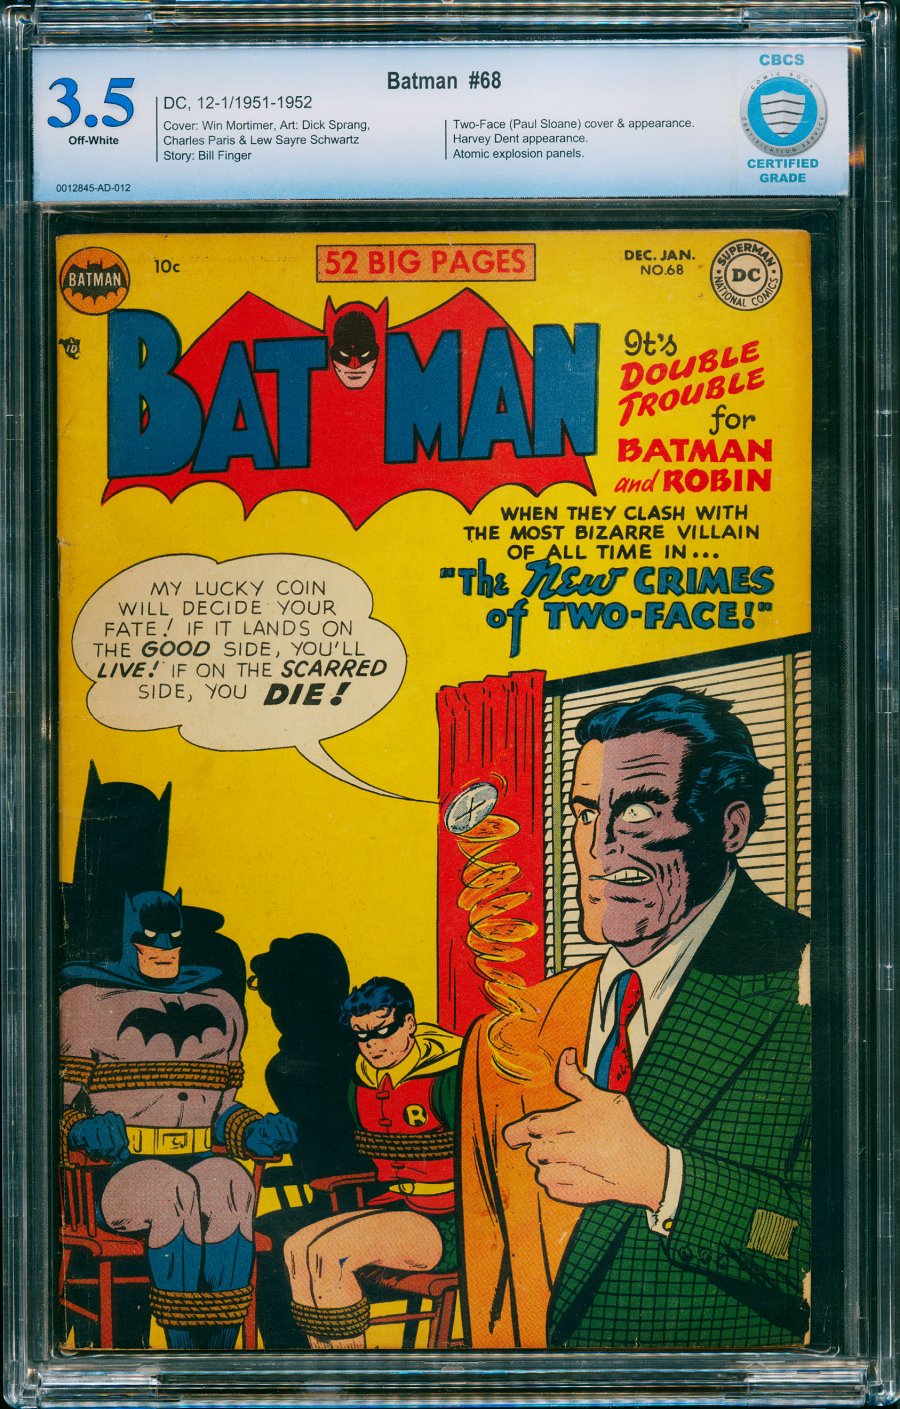 ComicConnect - BATMAN (1940-2011) #68 - CBCS VG-: 